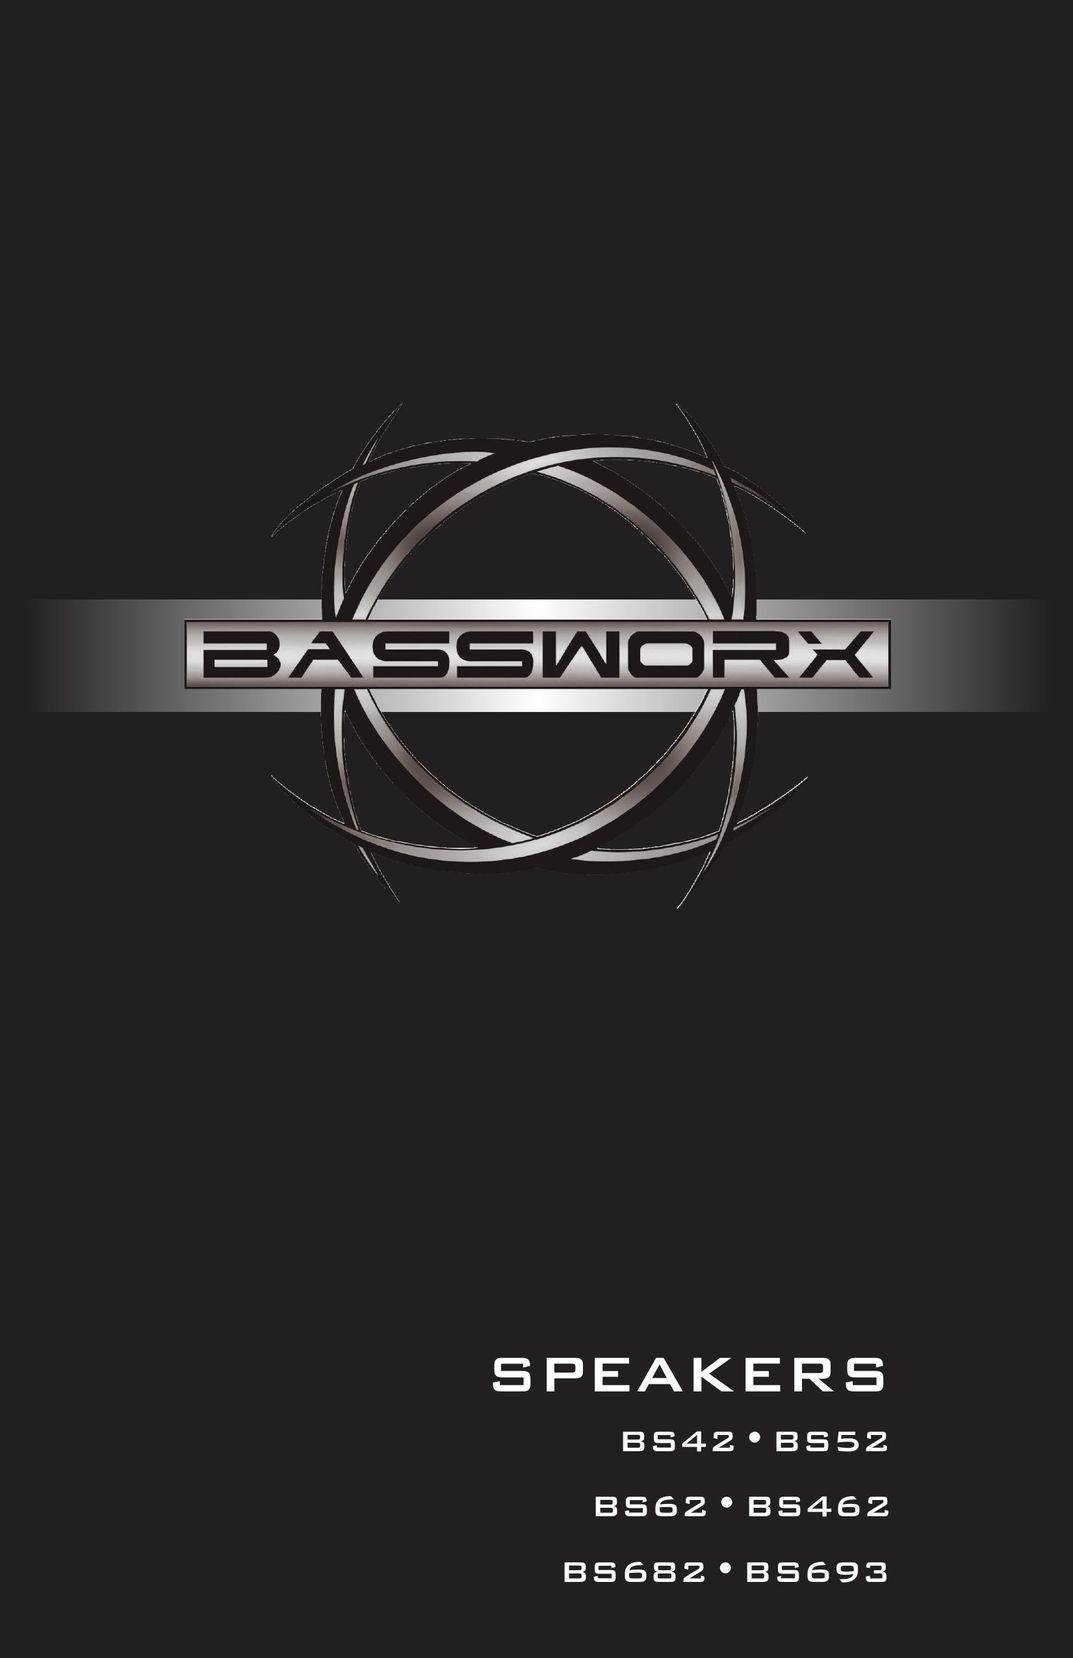 Bassworx BS52 Car Speaker User Manual